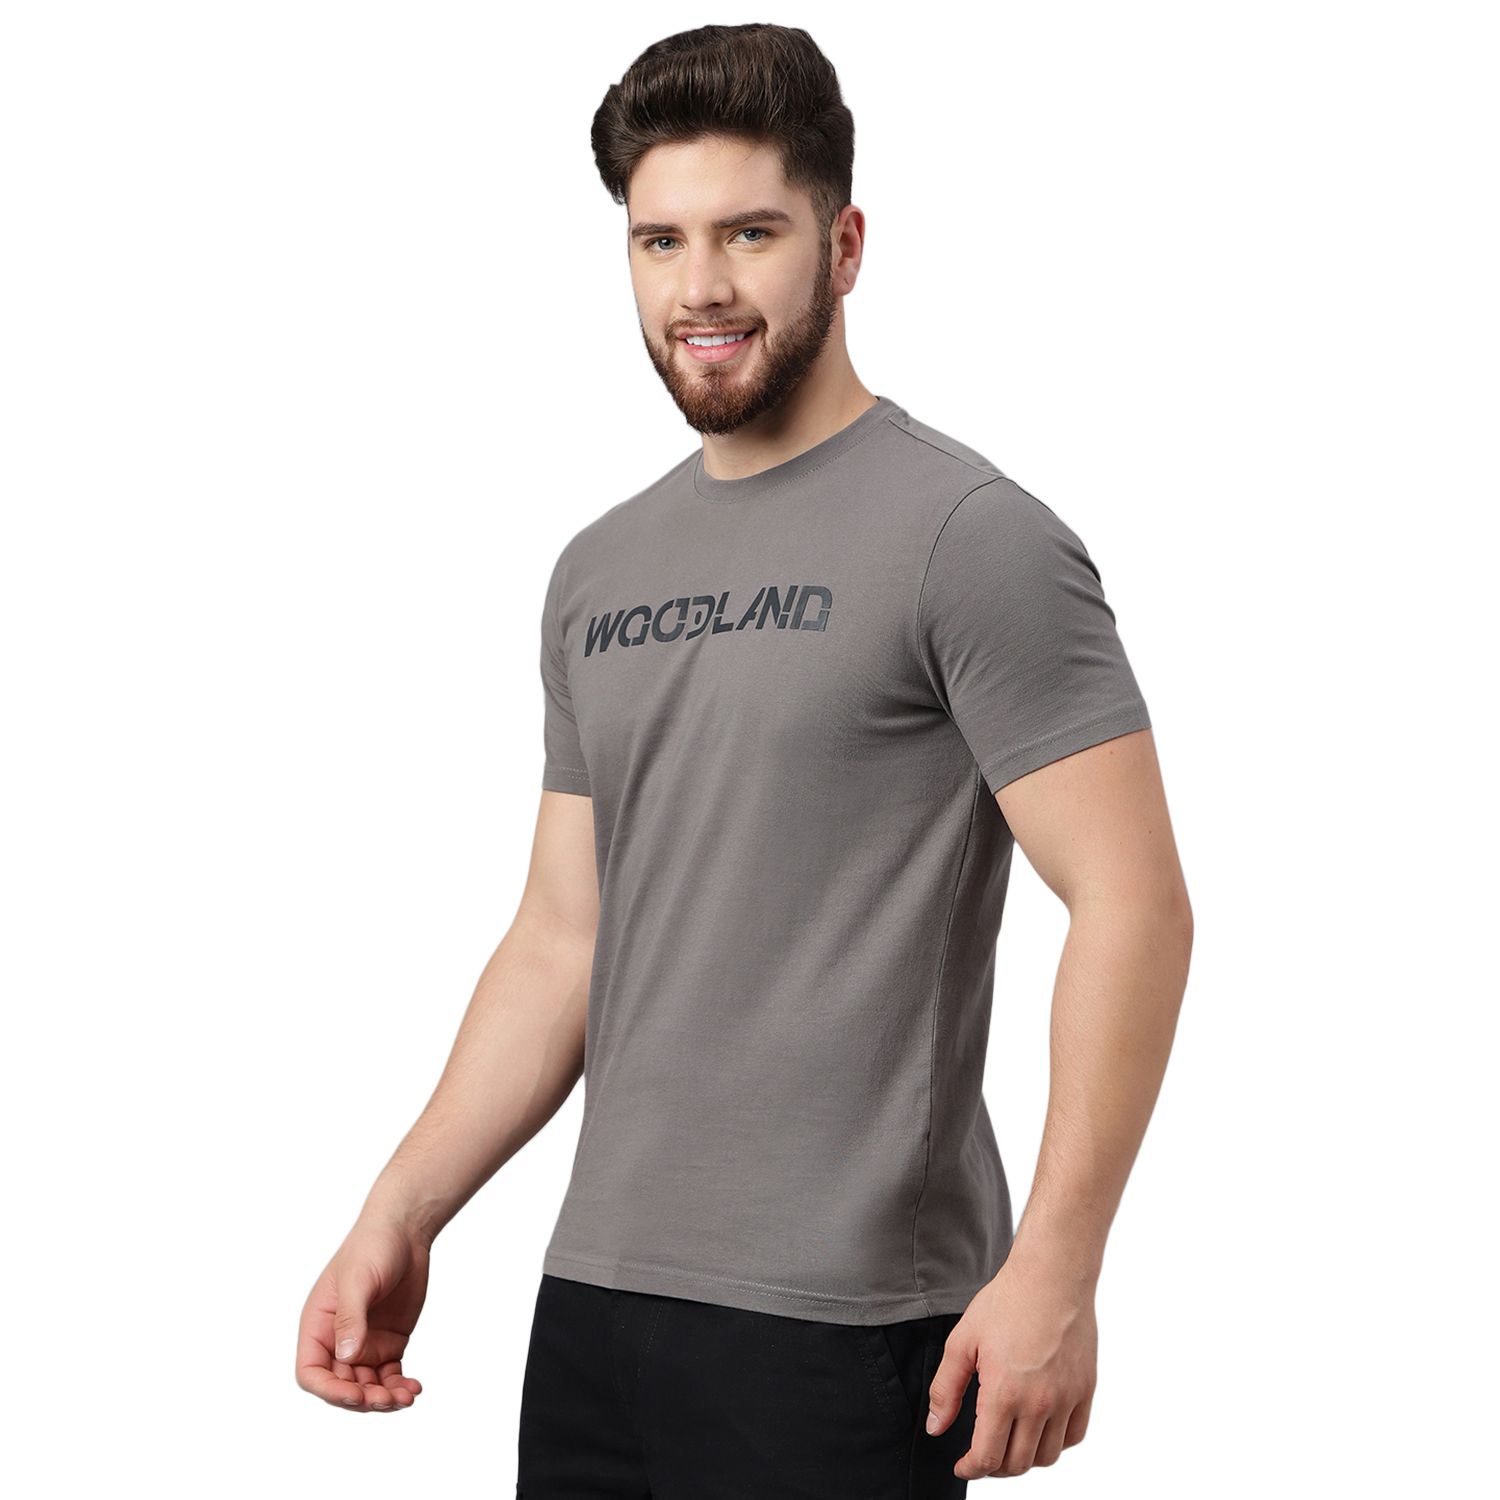 Grey crew neck t-shirt for men